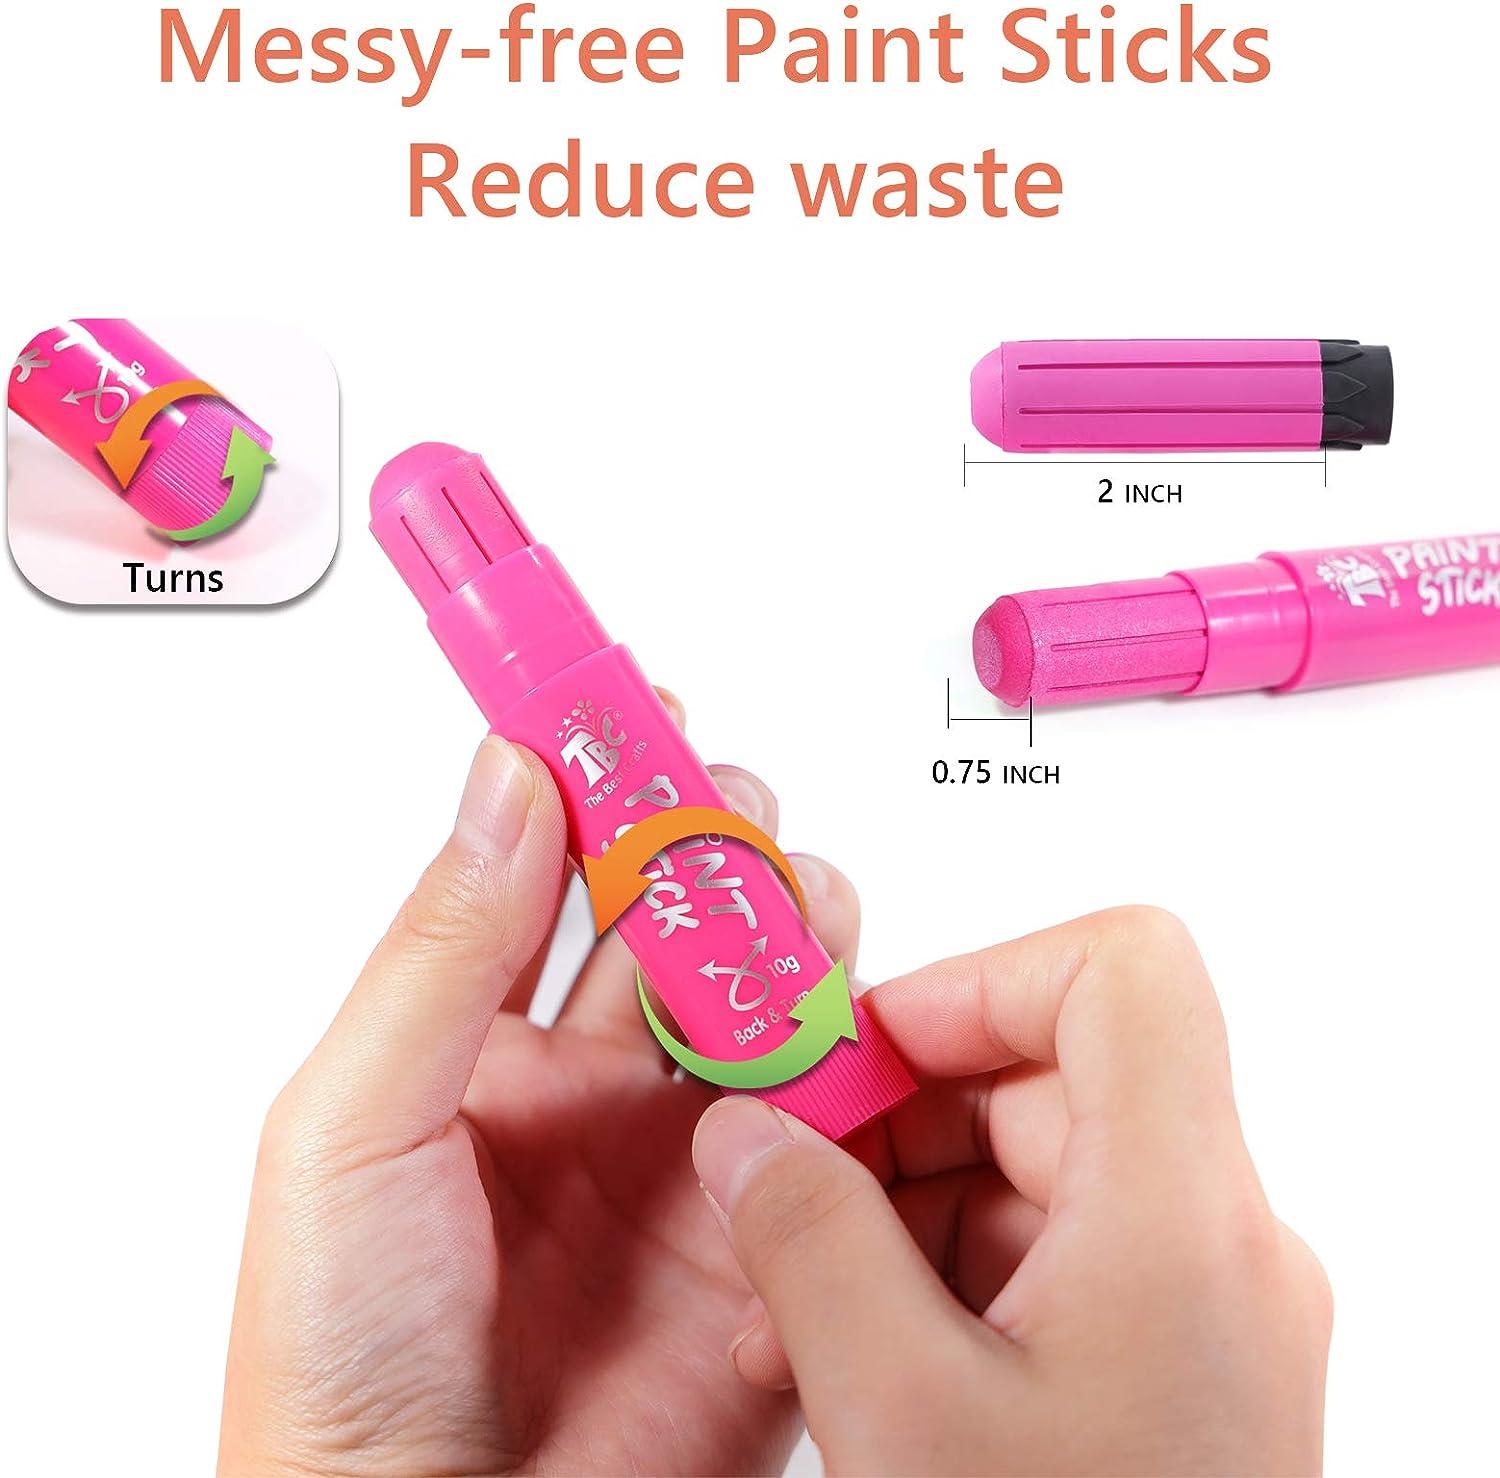 Shocking Pink: Tempera Paint Stick Lightfast Tests